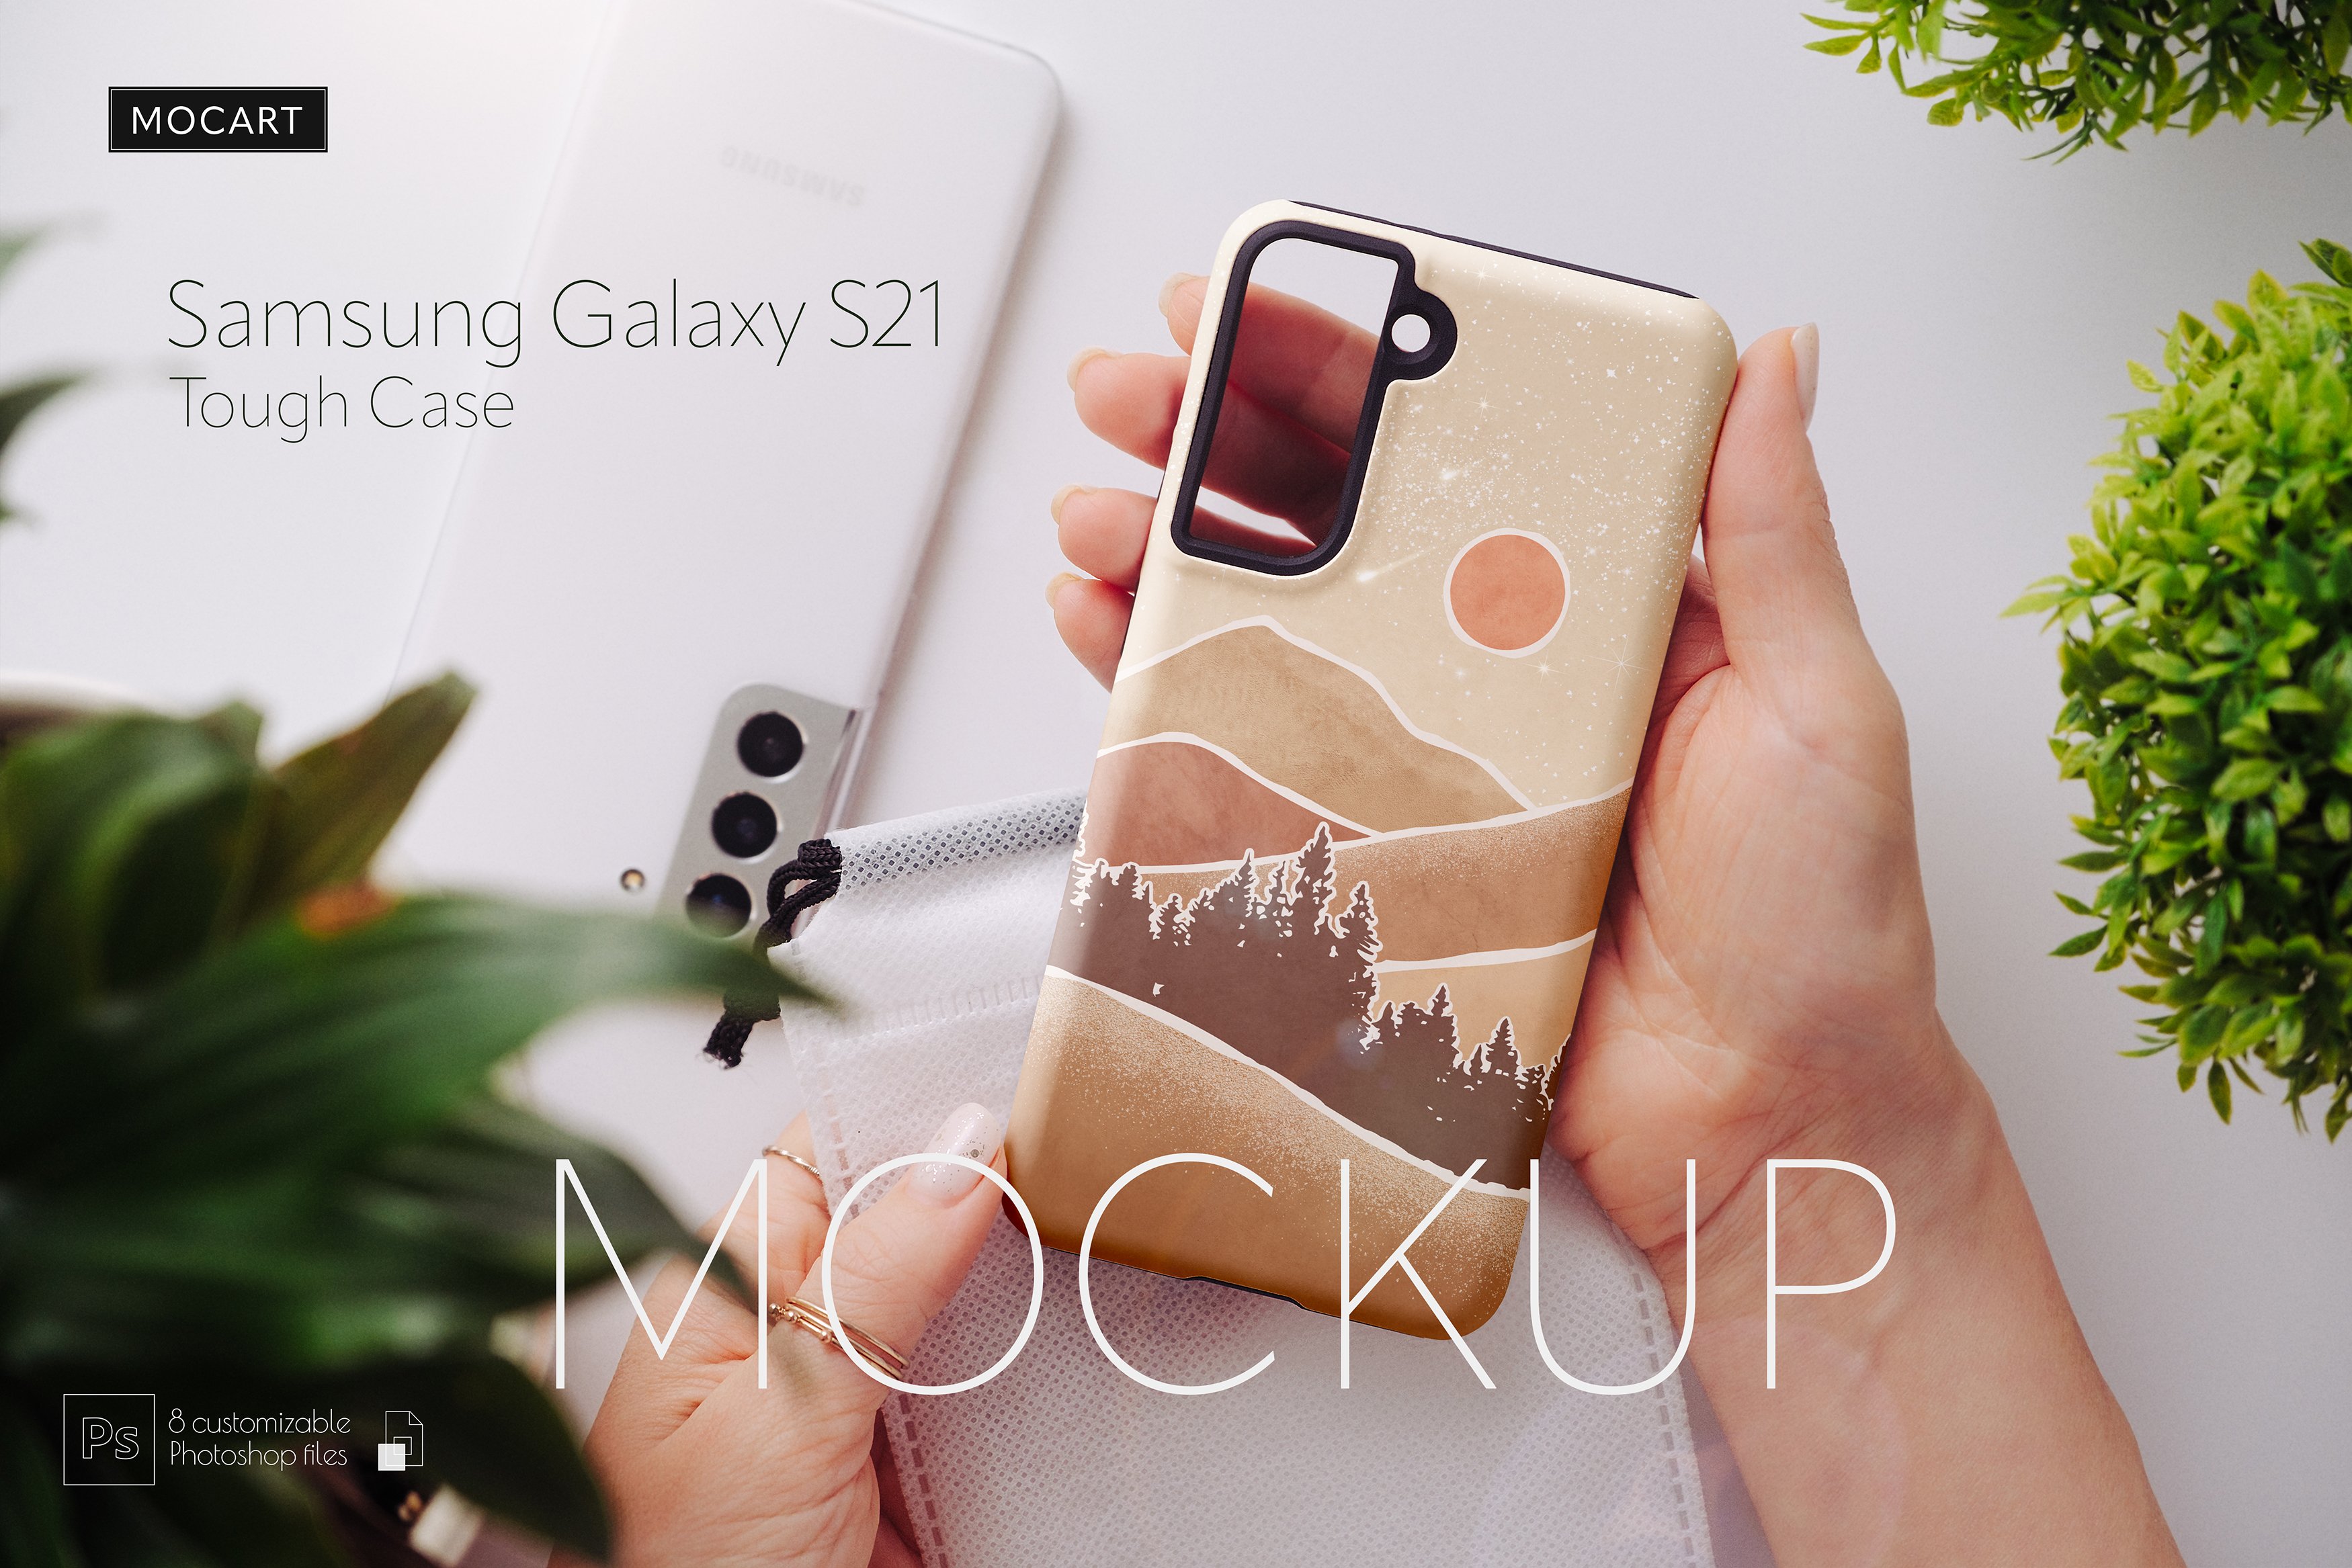 Samsung Galaxy S21 Tough Case Mockup cover image.